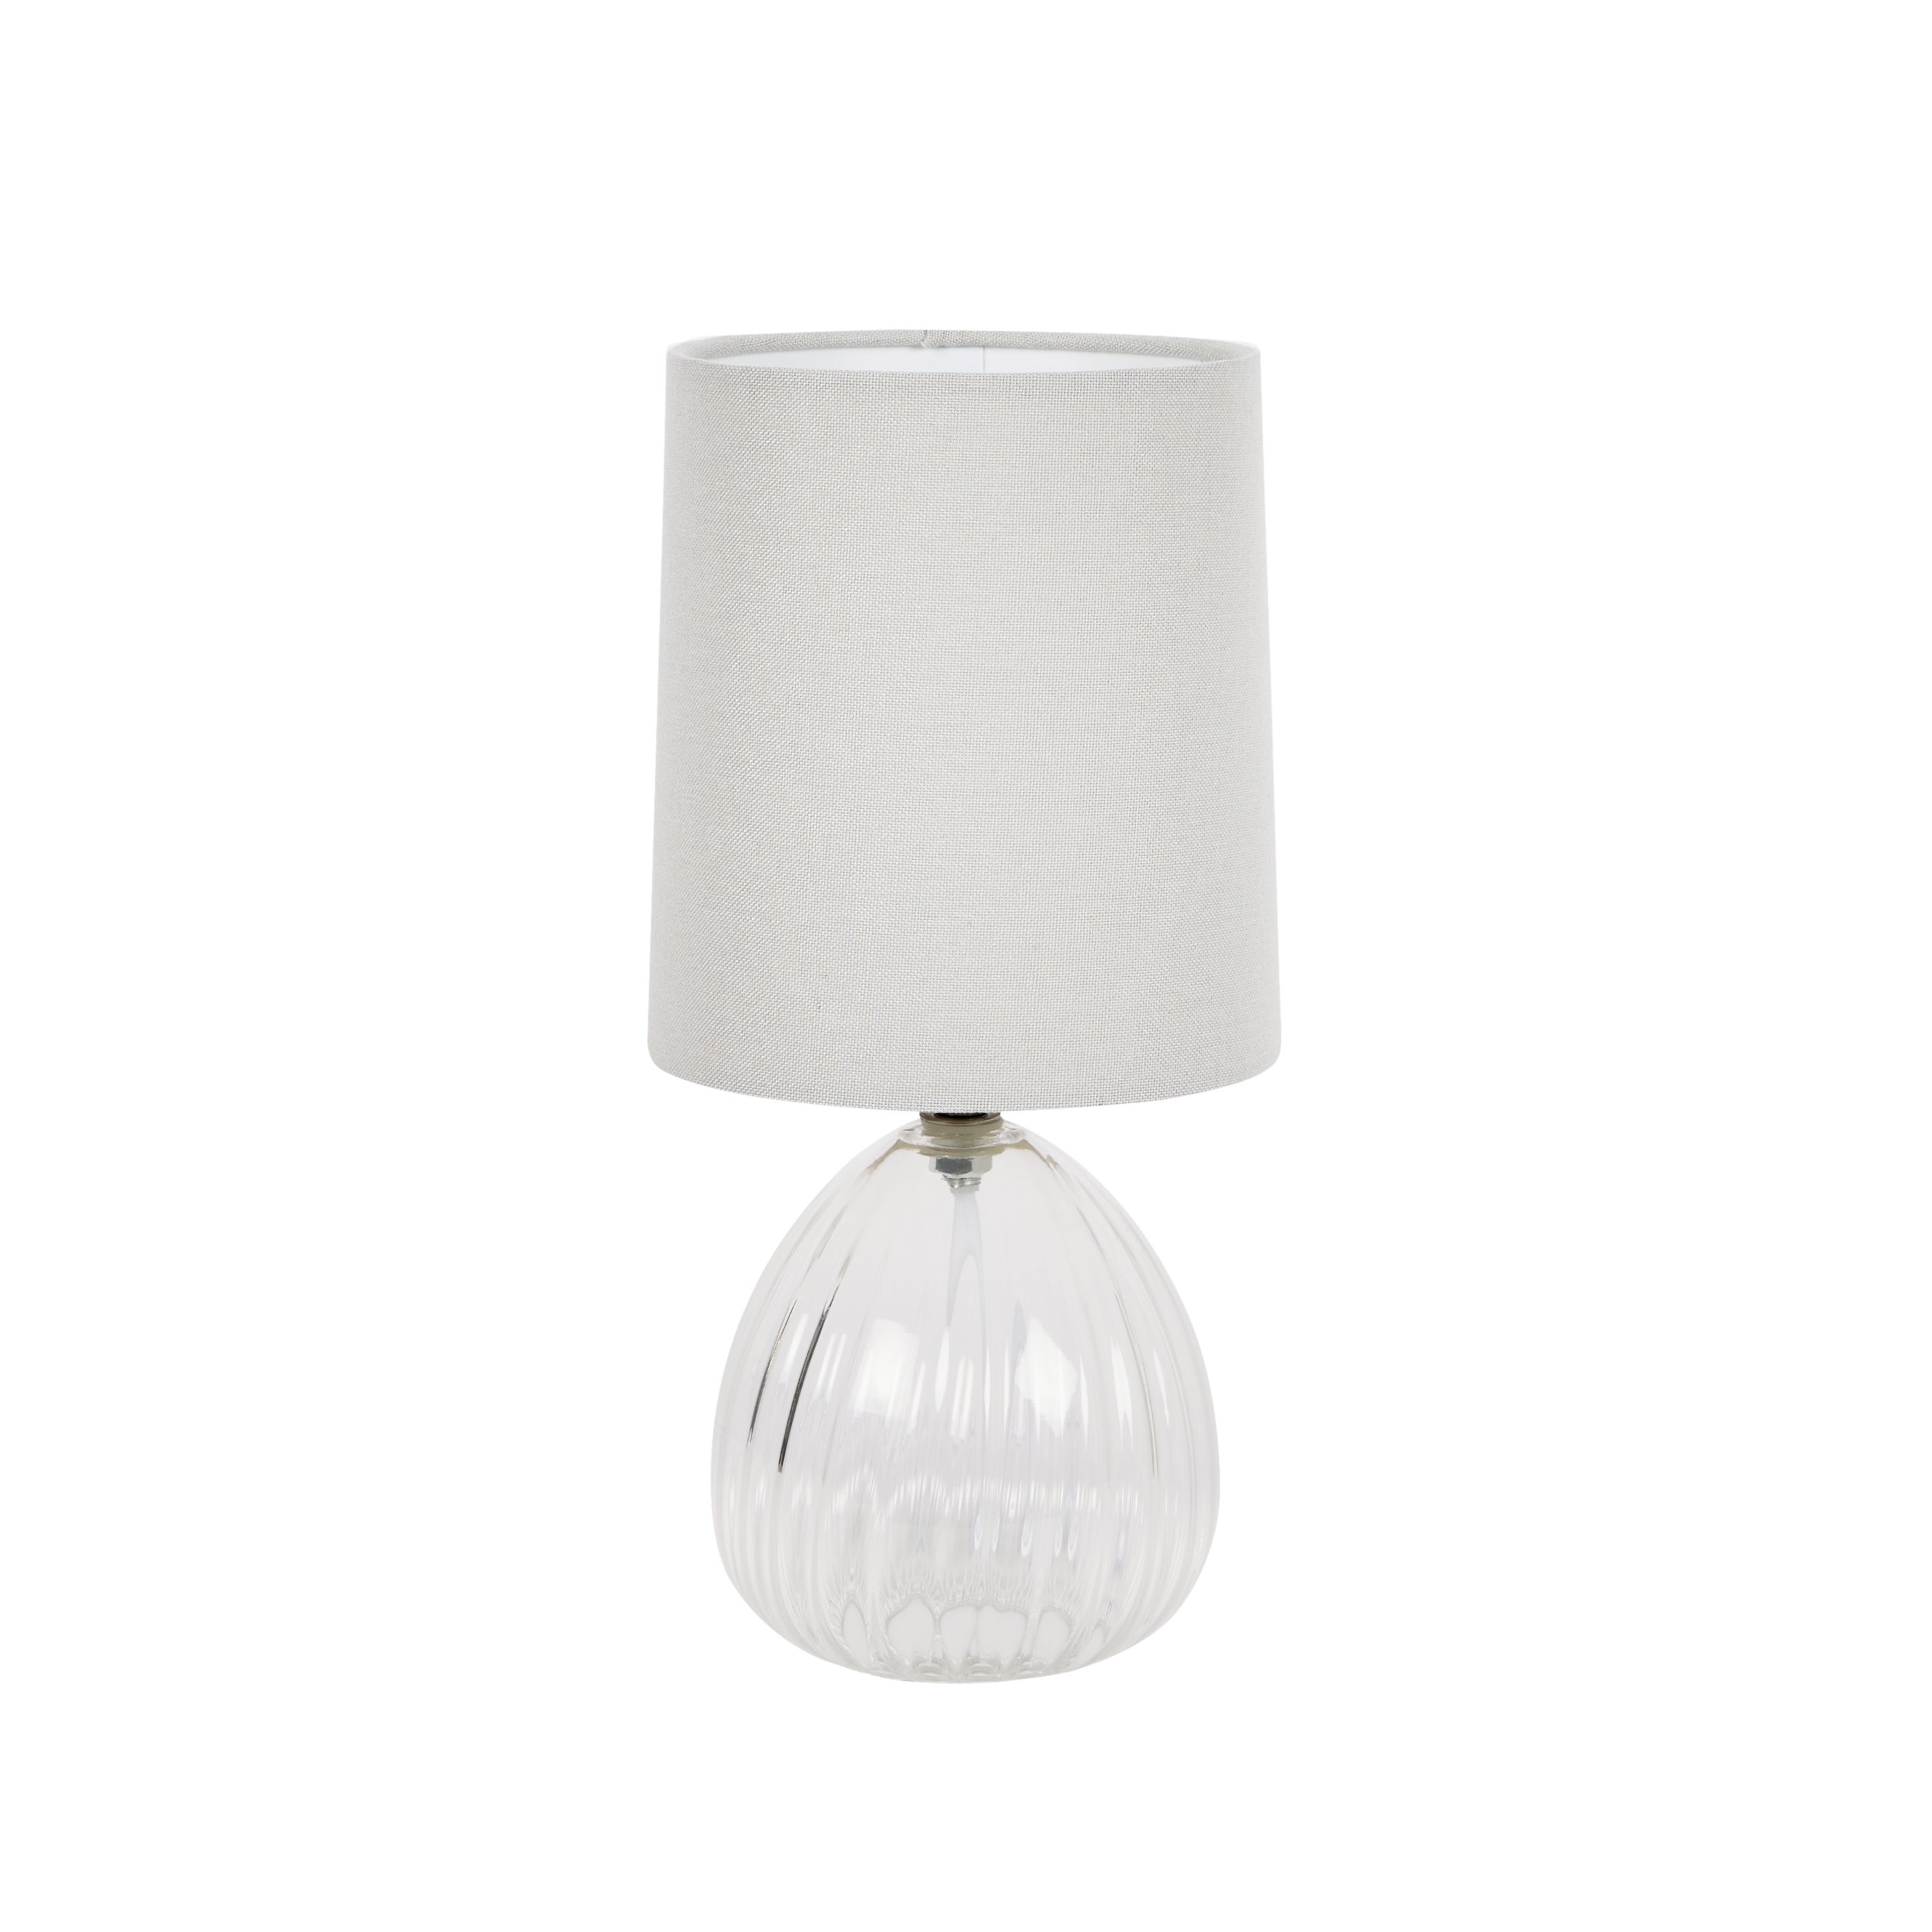 Cherie Glass Table Lamp Cream